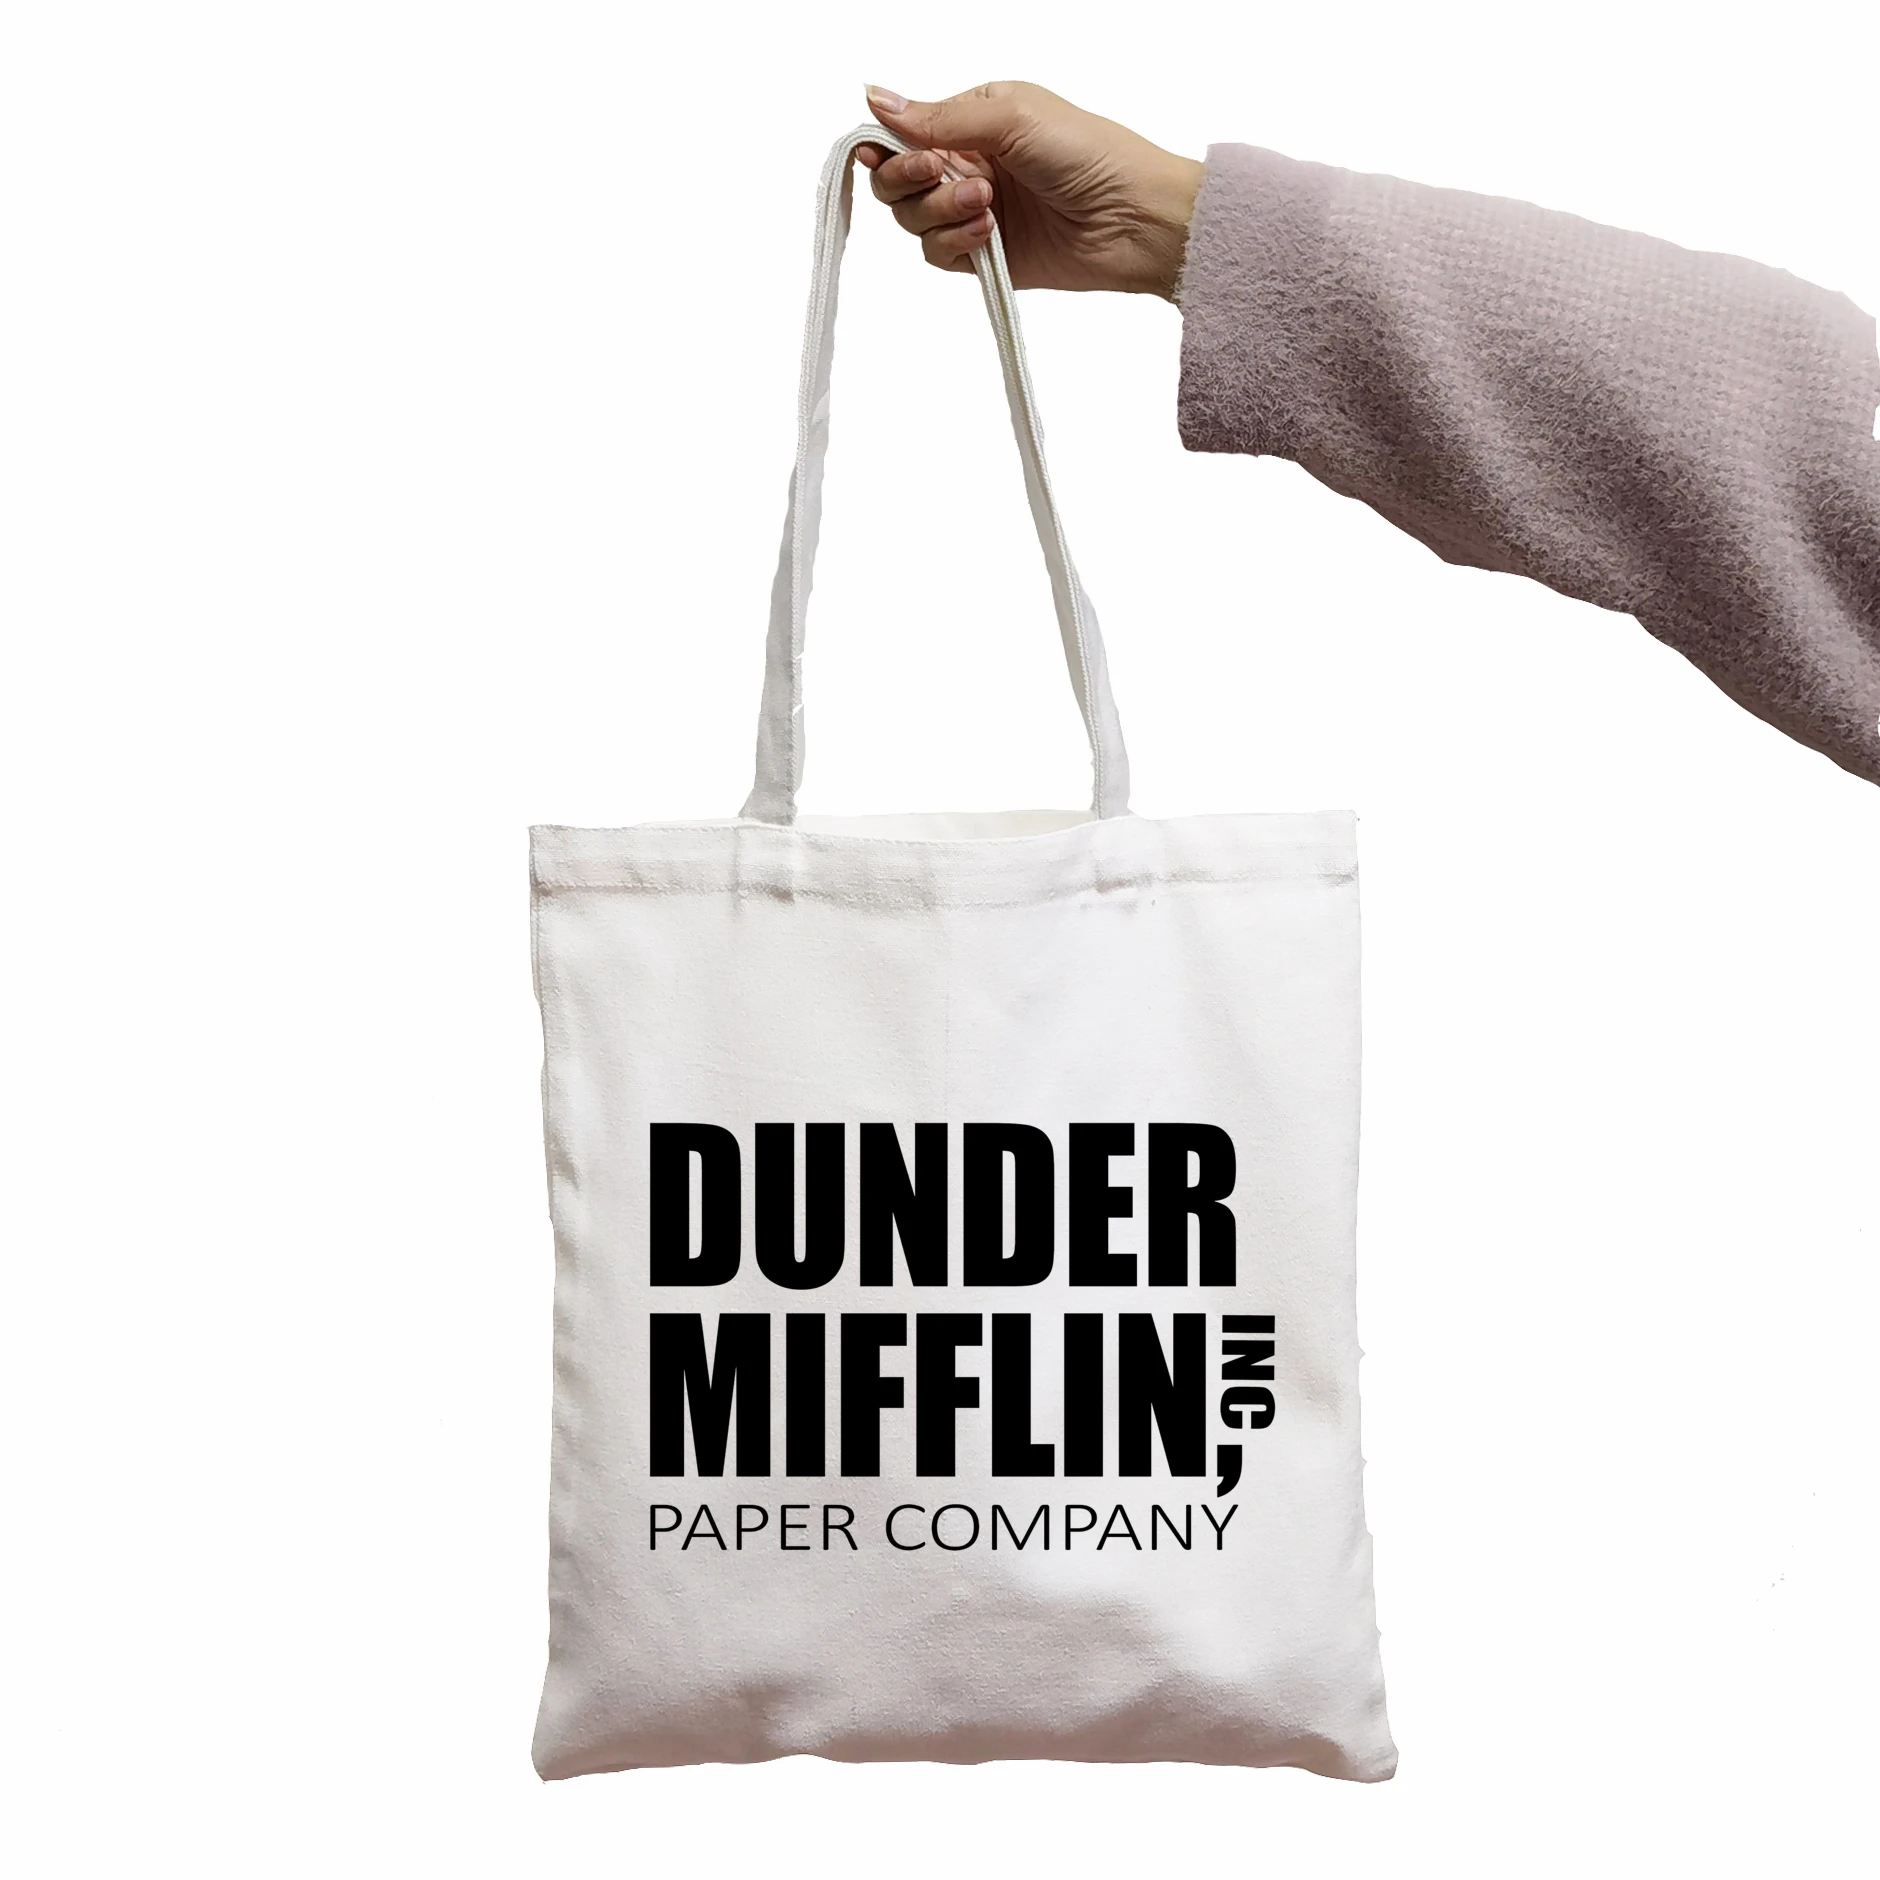 Bag The Office TV Show Dunder Mifflin Paper Company Print Cool Shopper Bag Shopper White Women shopper shoulder bags Tote bag images - 6